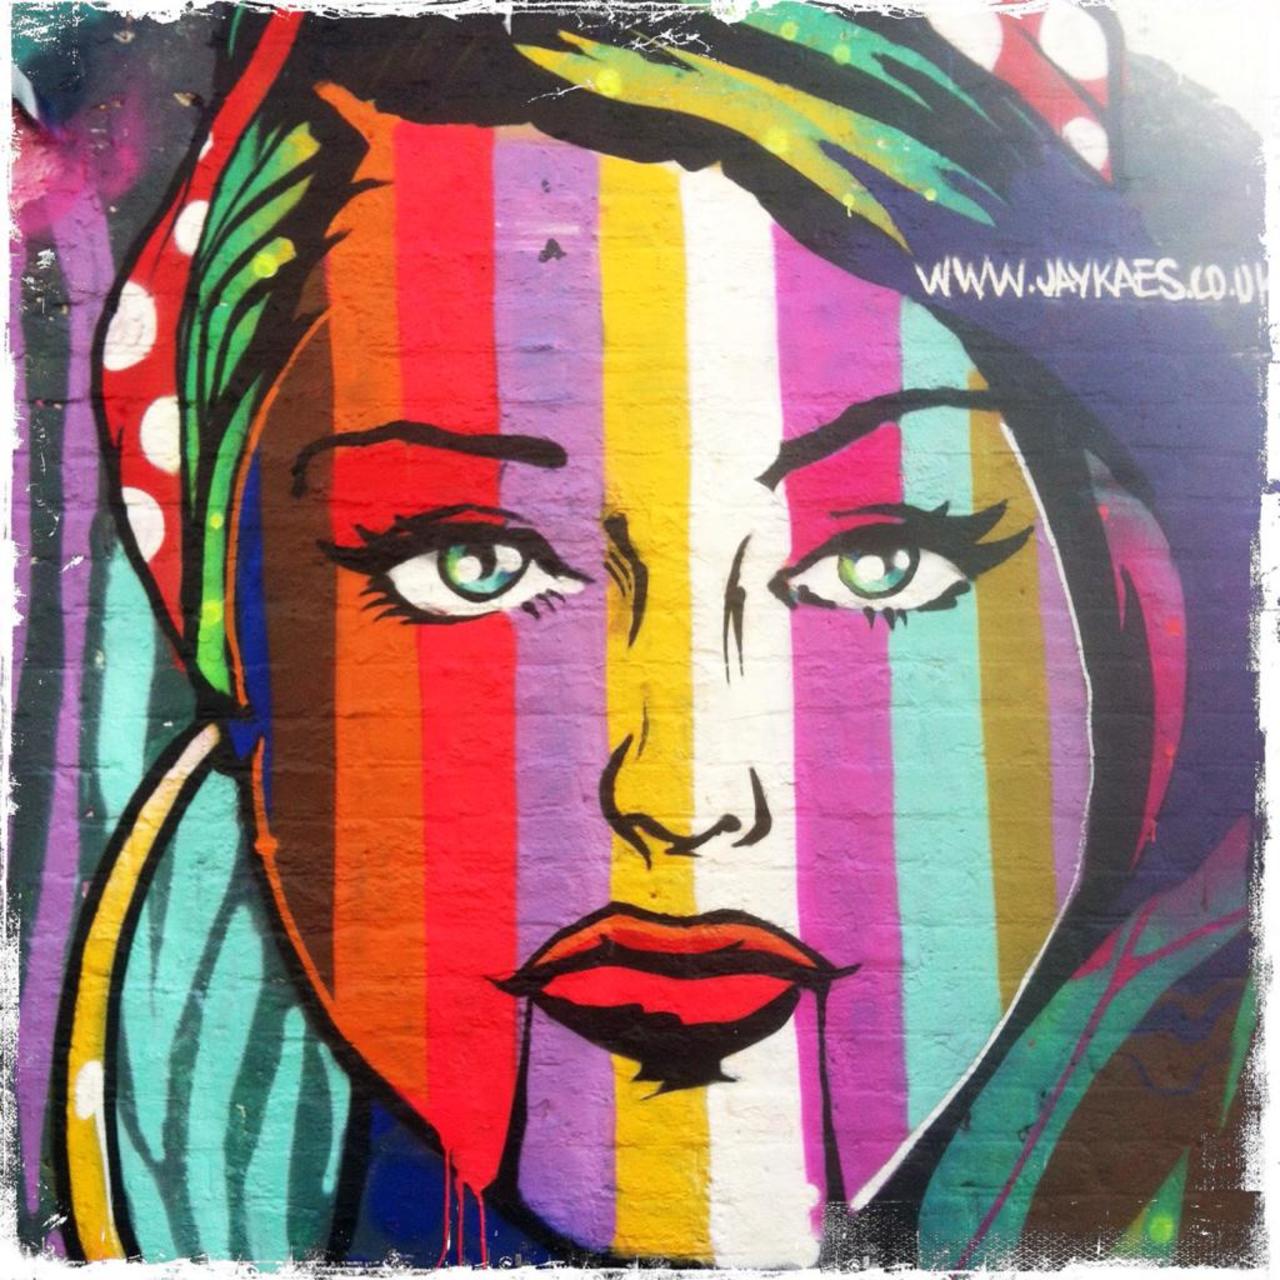 Finished Jay Kaes work on Sclater Street. #art #streetart #graffiti http://t.co/XMc4iVPN0o